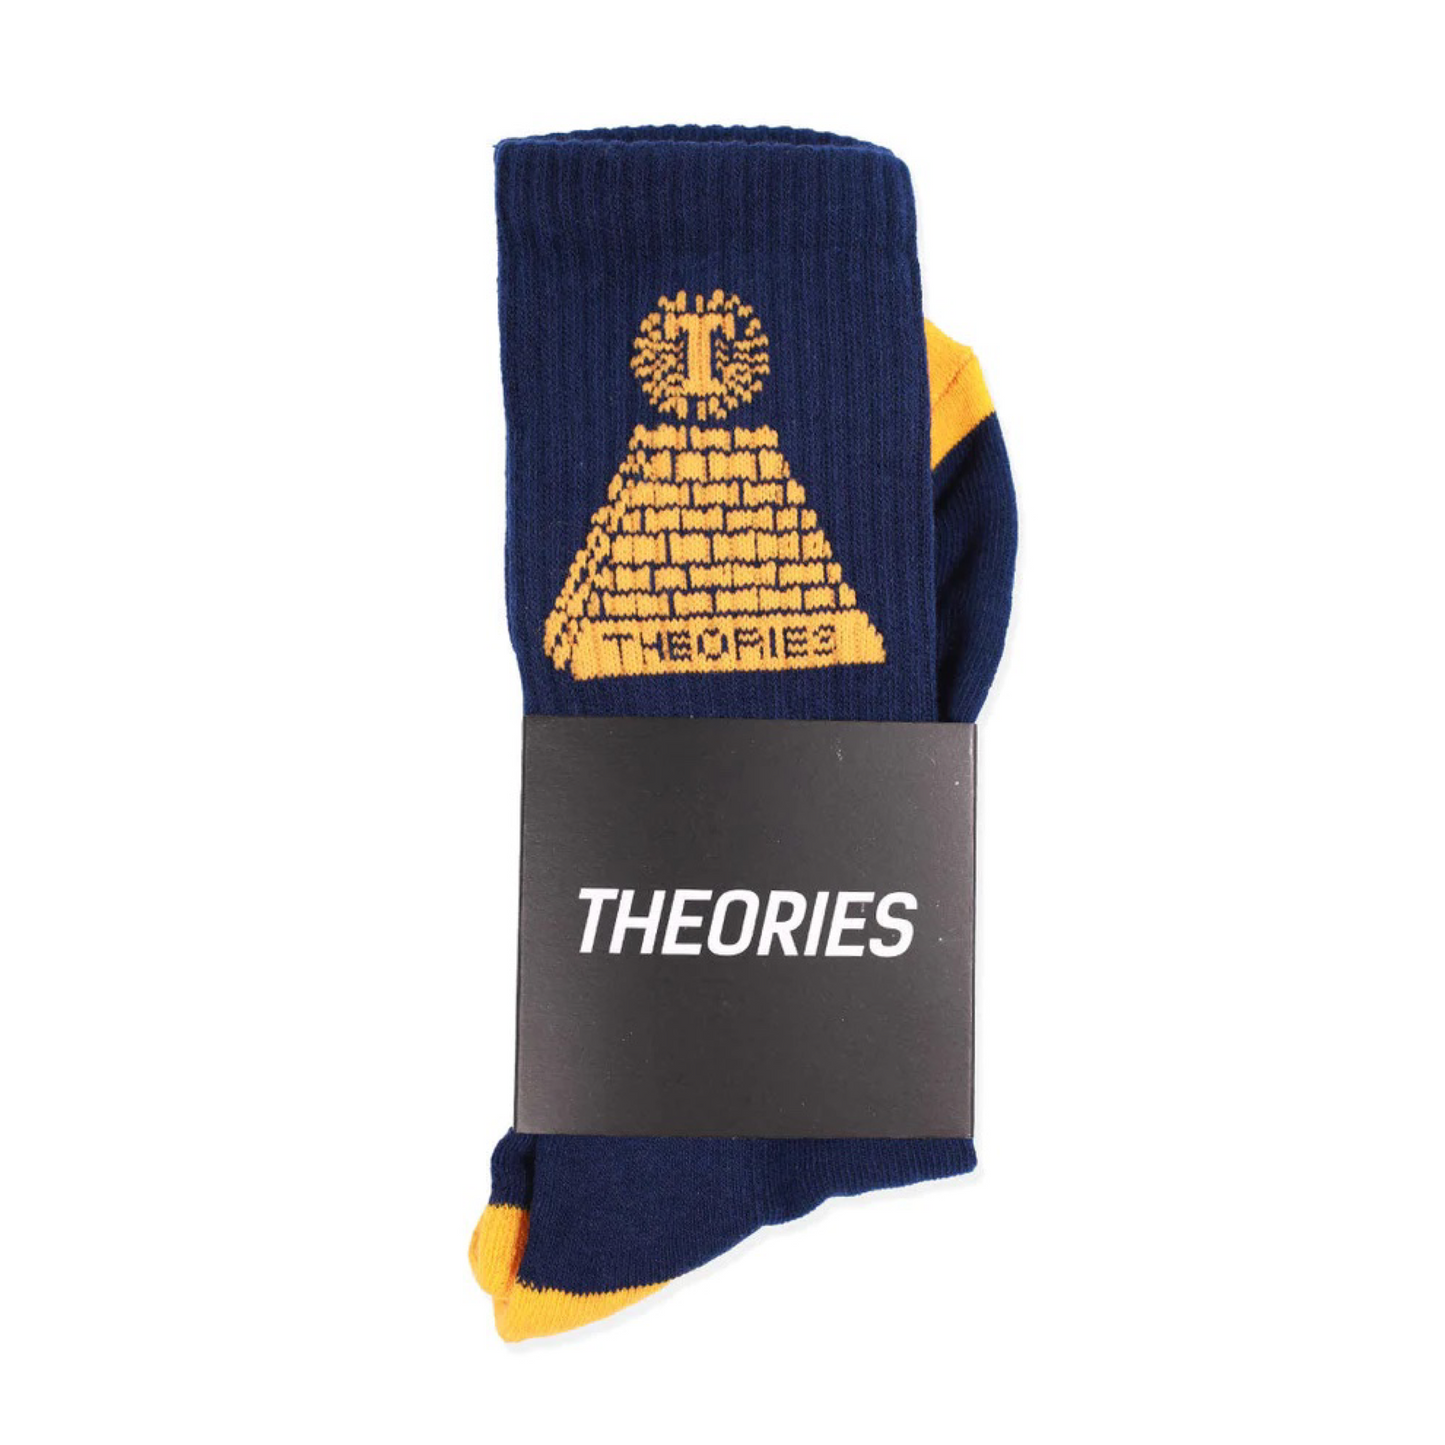 Theories of Atlantis - Theoramid Socks (Navy/Gold)